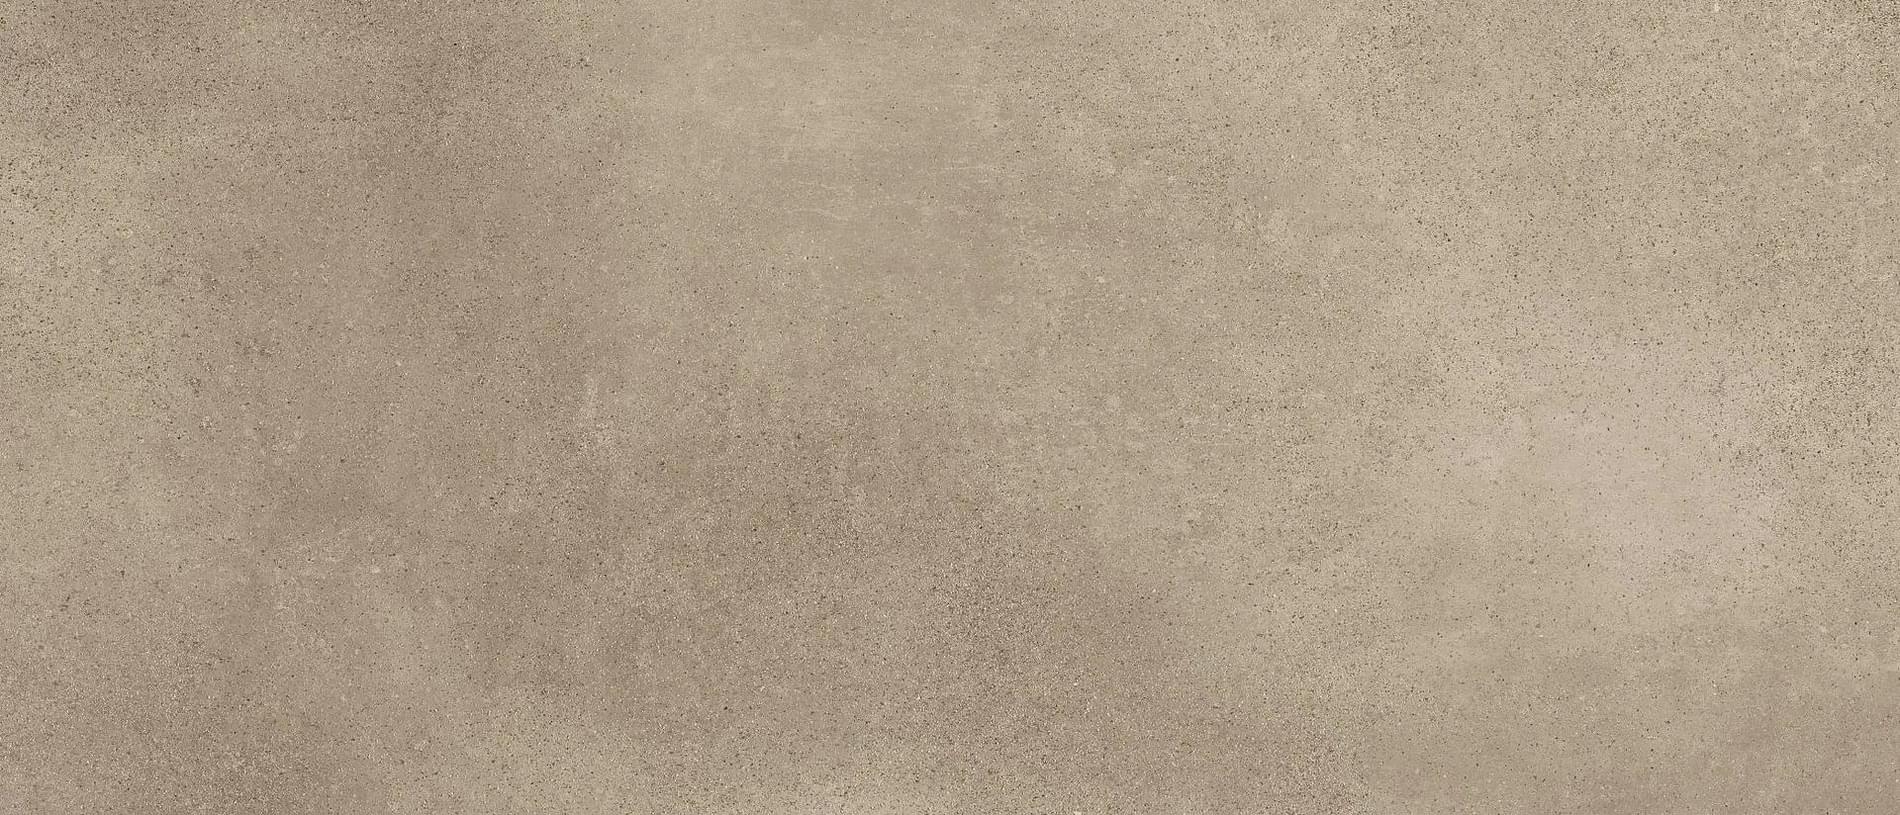 Terratinta Kos Sand On Crate 6 Mm 120x280